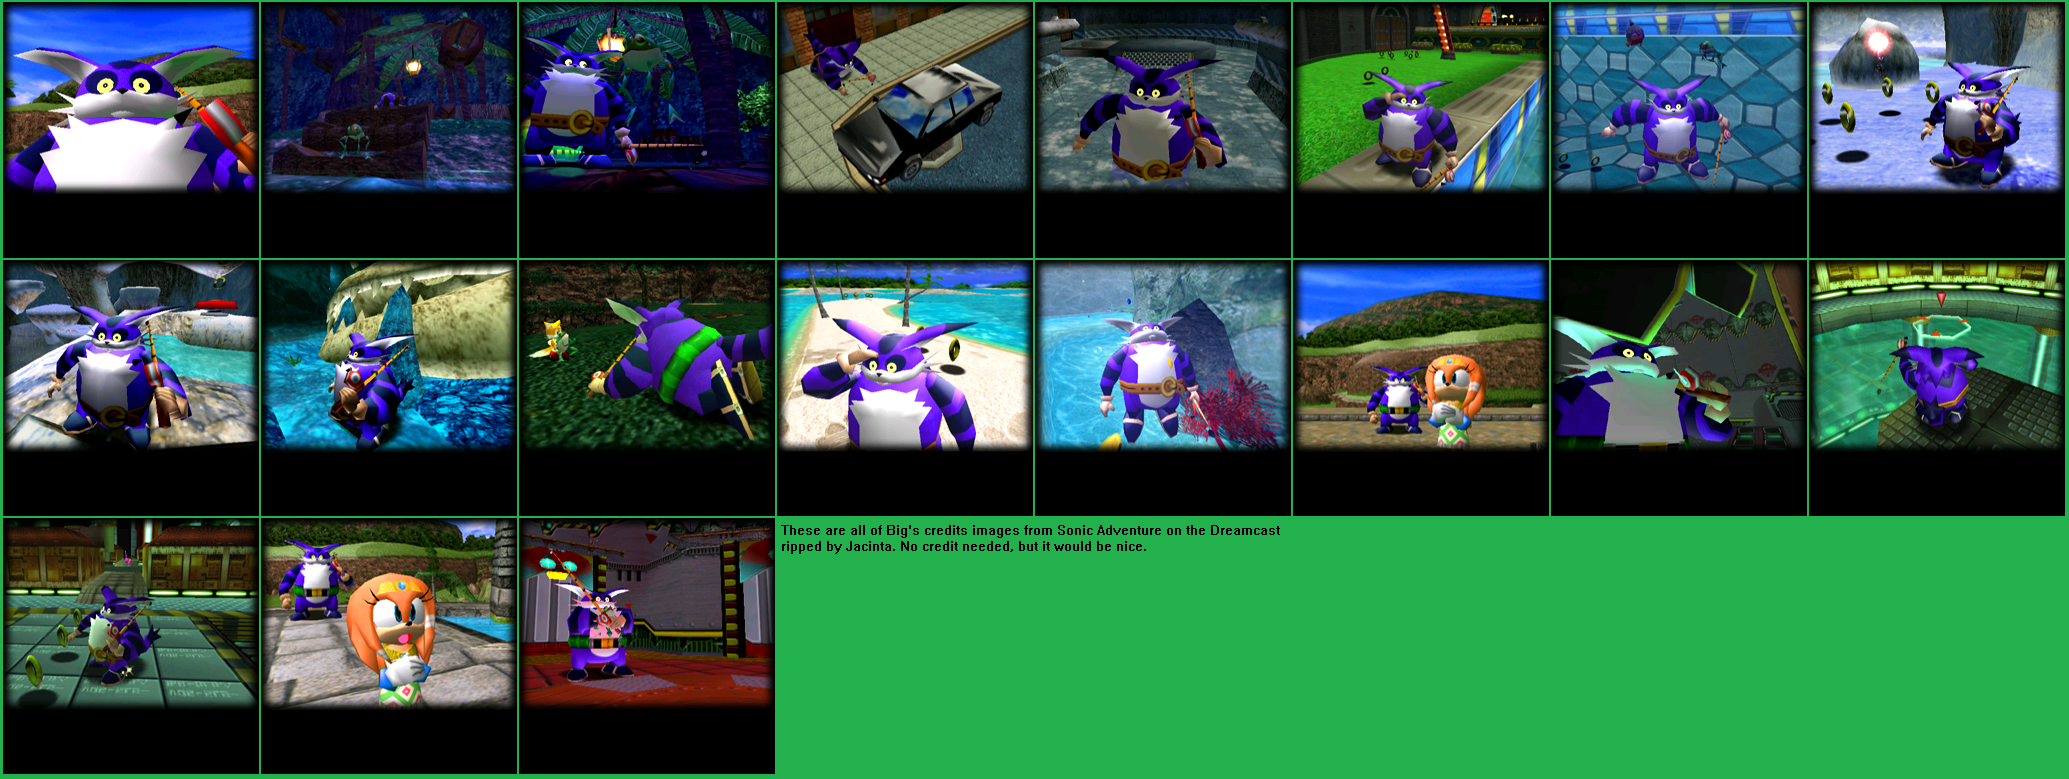 Sonic Adventure - Credits Images (Big)